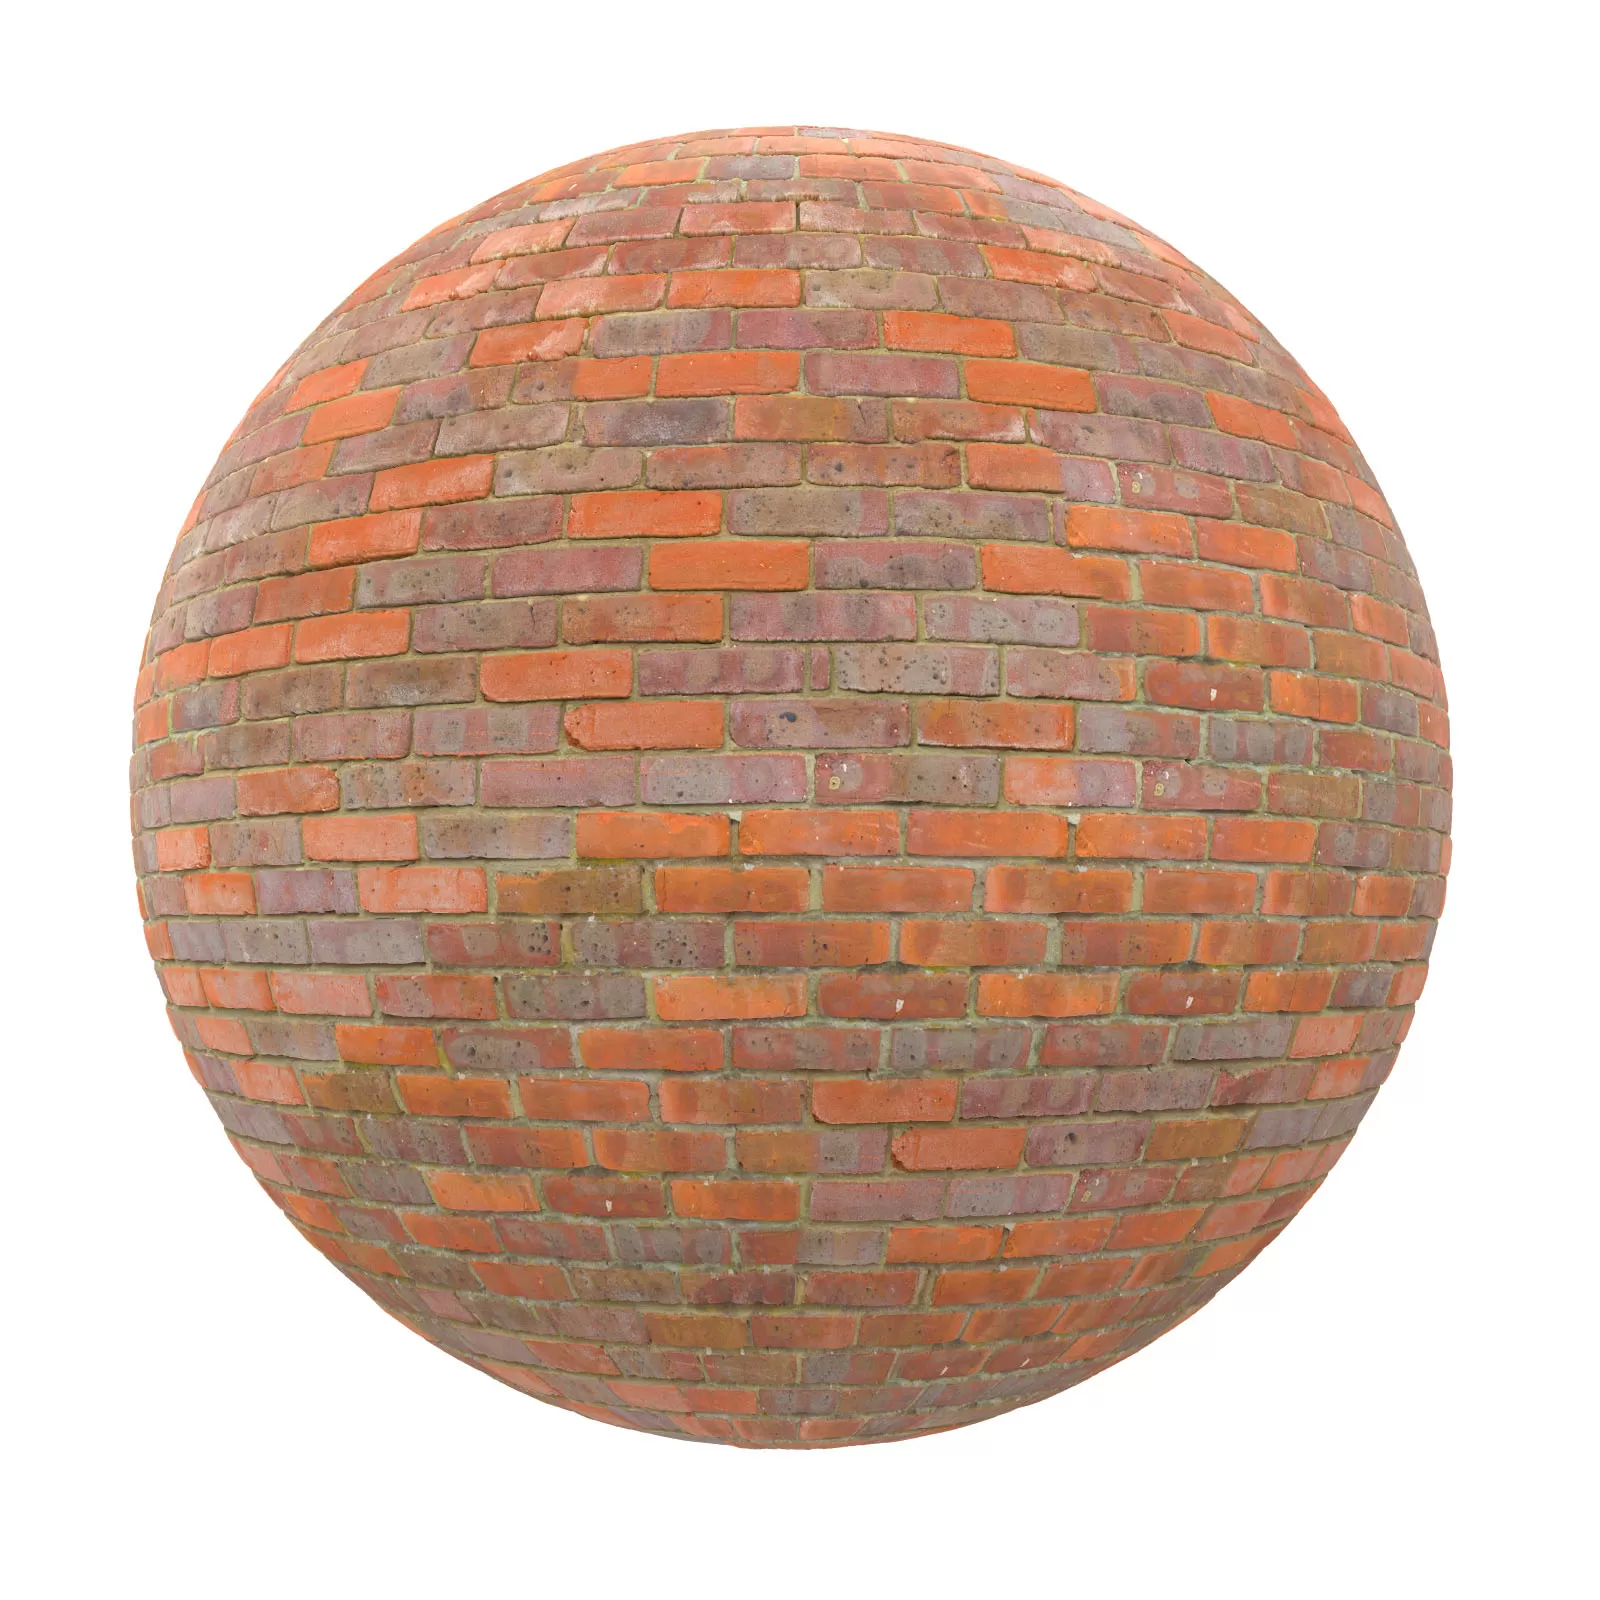 PBR CGAXIS TEXTURES – BRICK – Red Brick Wall 14